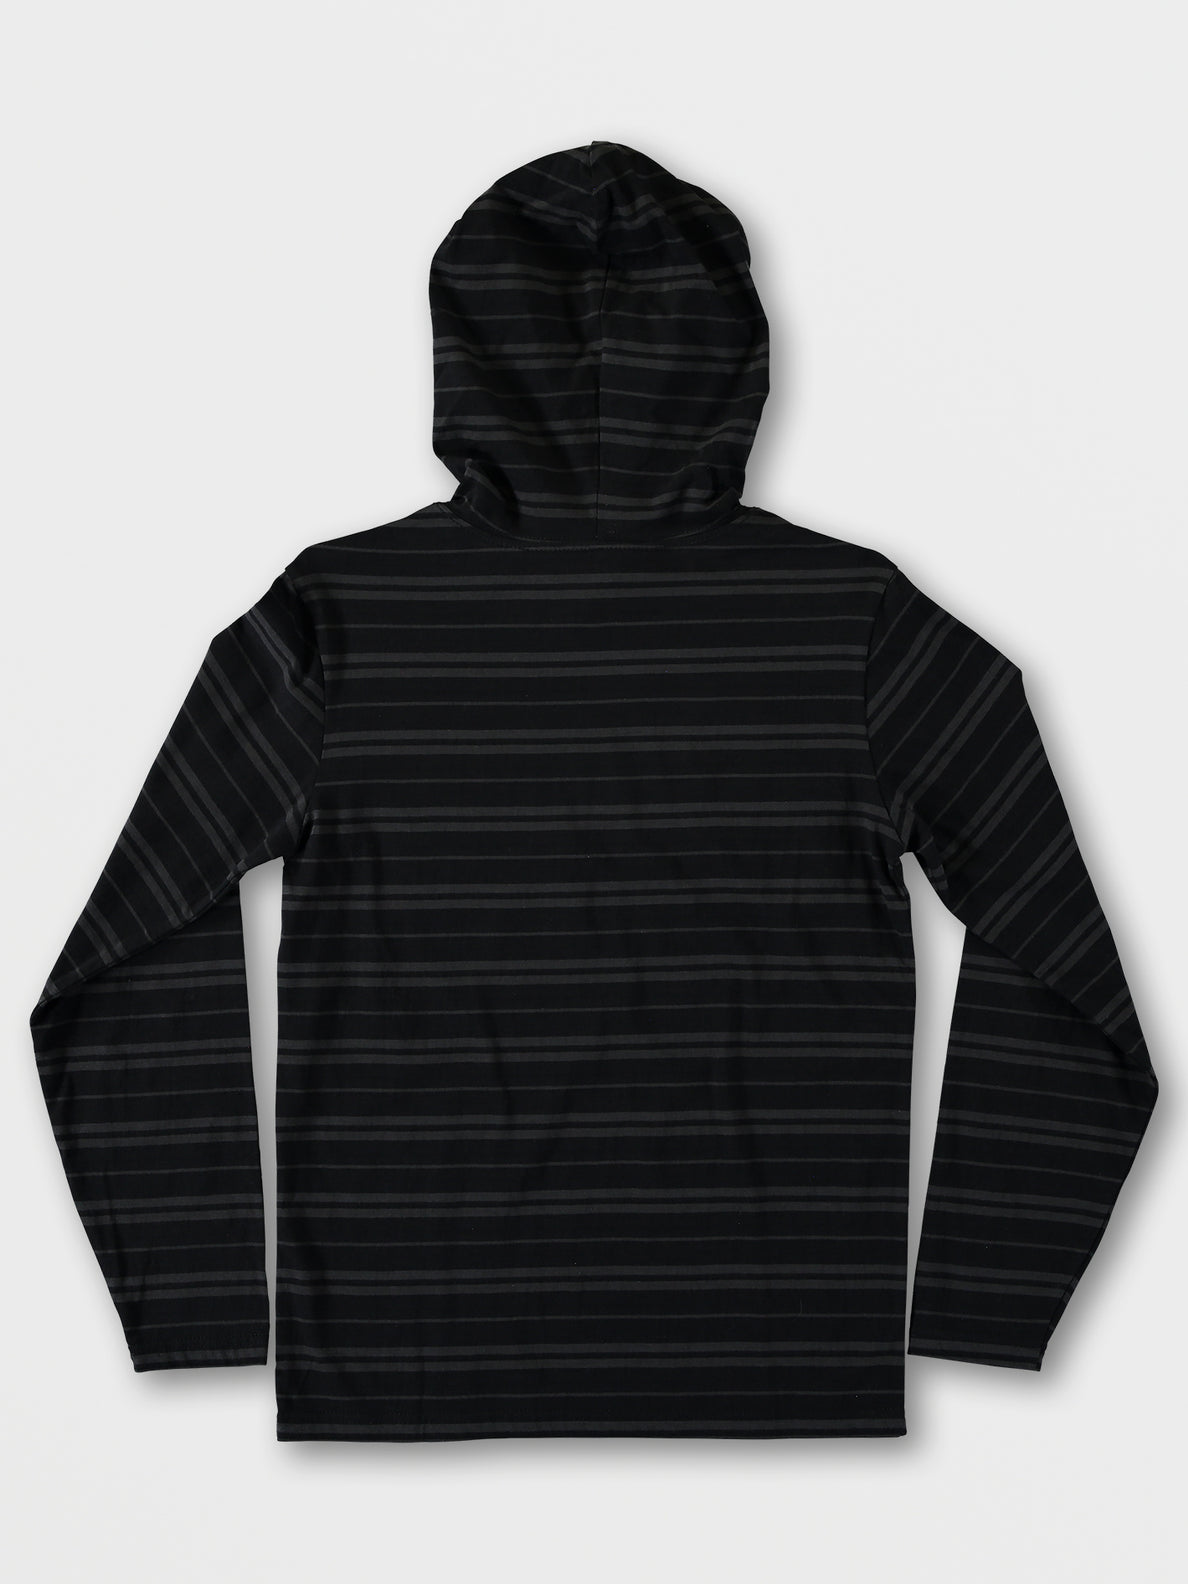 Big Boys Parables Striped Hooded Shirt - Black